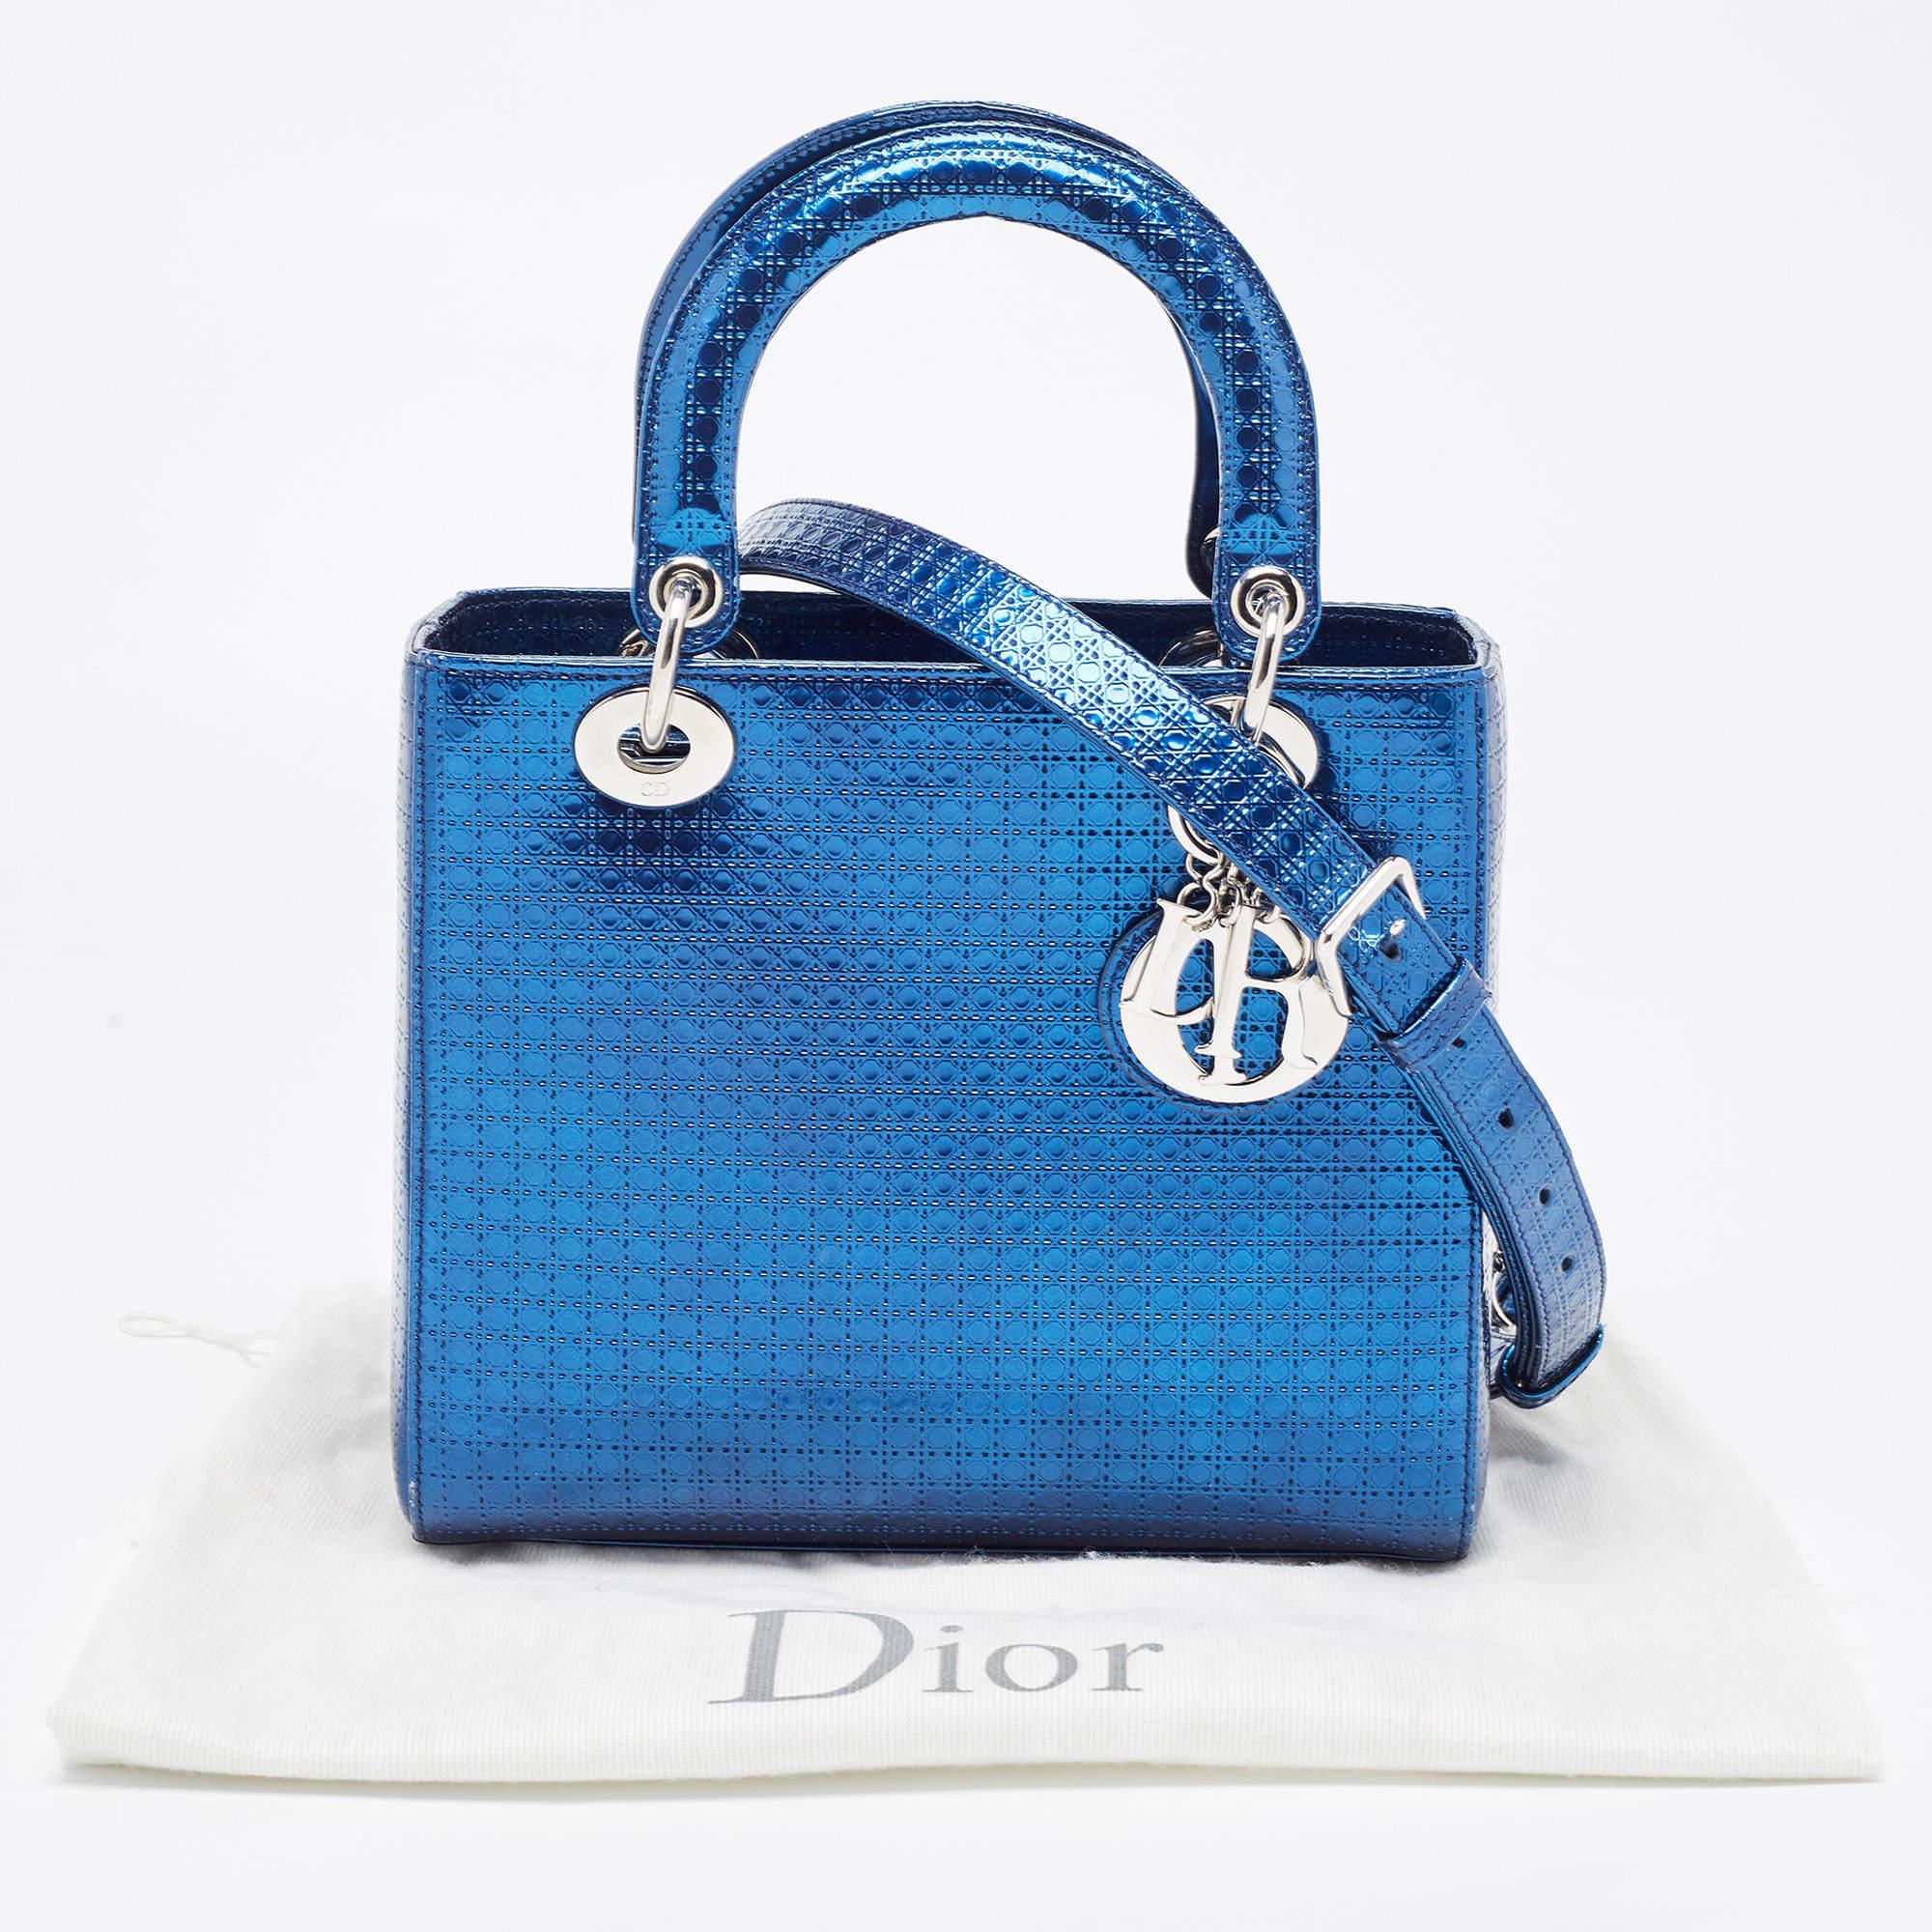 Dior Metallic Blue Microcannage Patent Leather Medium Lady Dior Tote 15